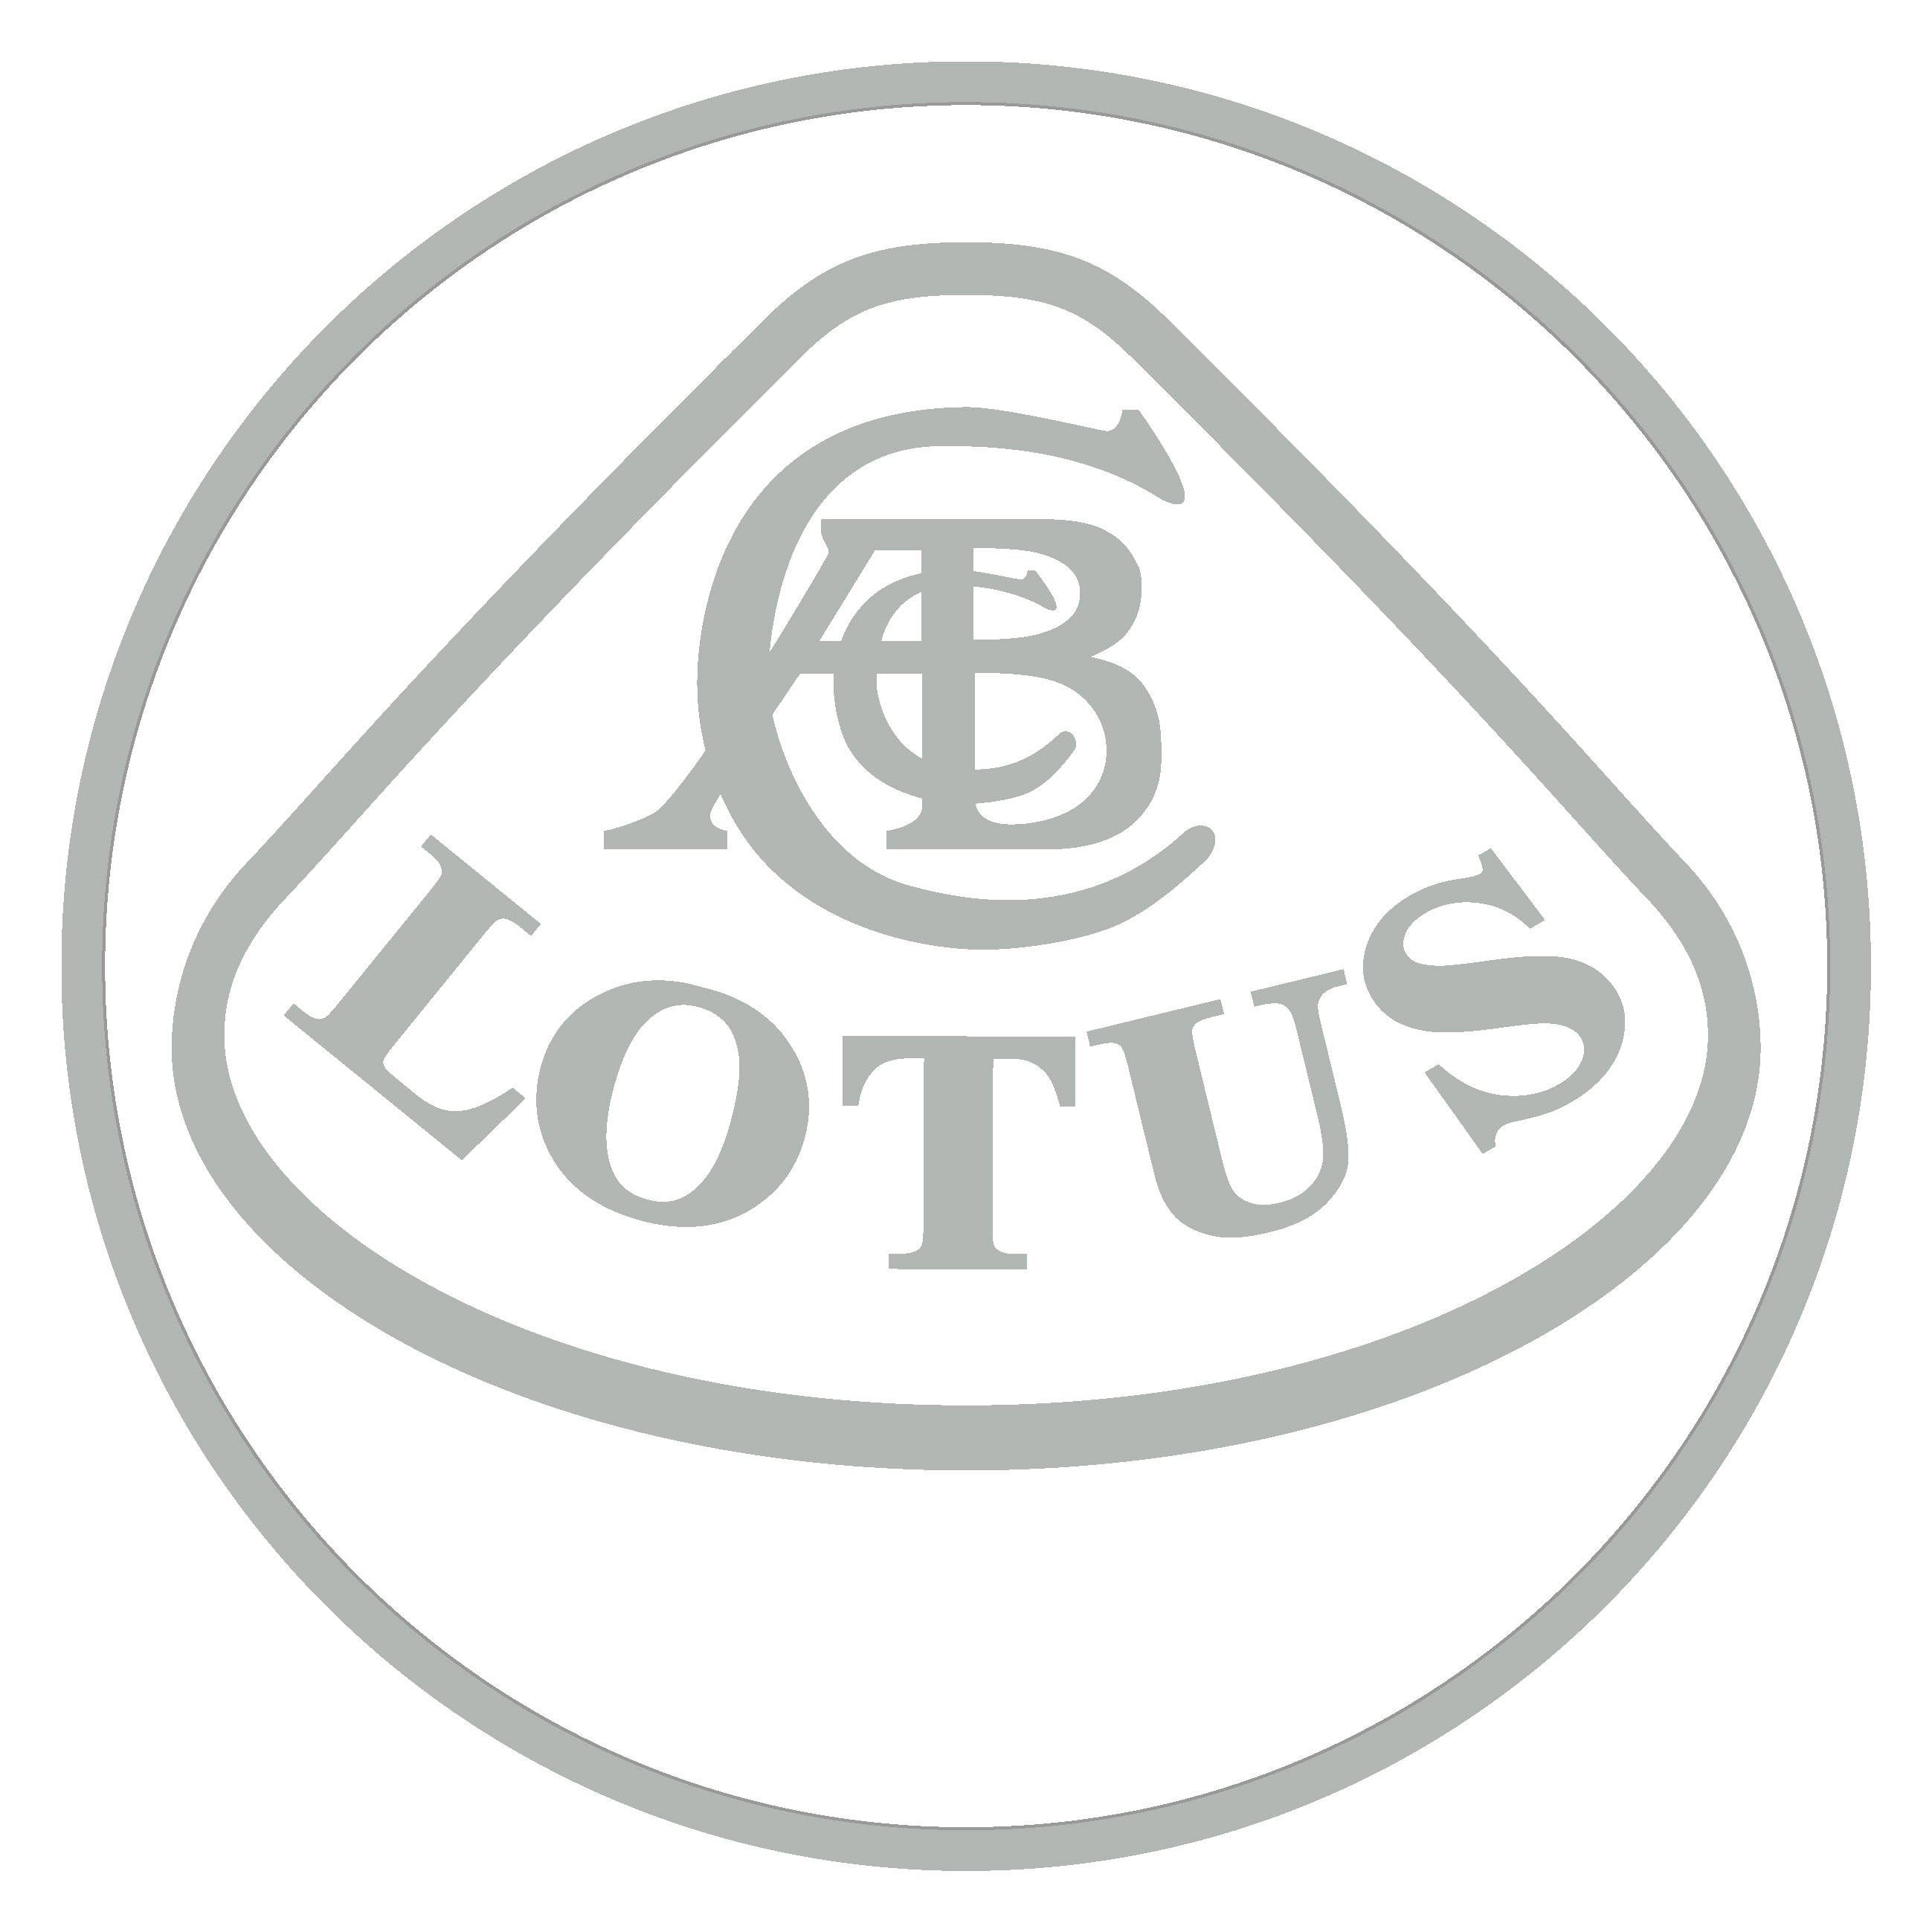 Polo Lotus Driver. - Pagina 3 Logo_Lotus_gris_hd